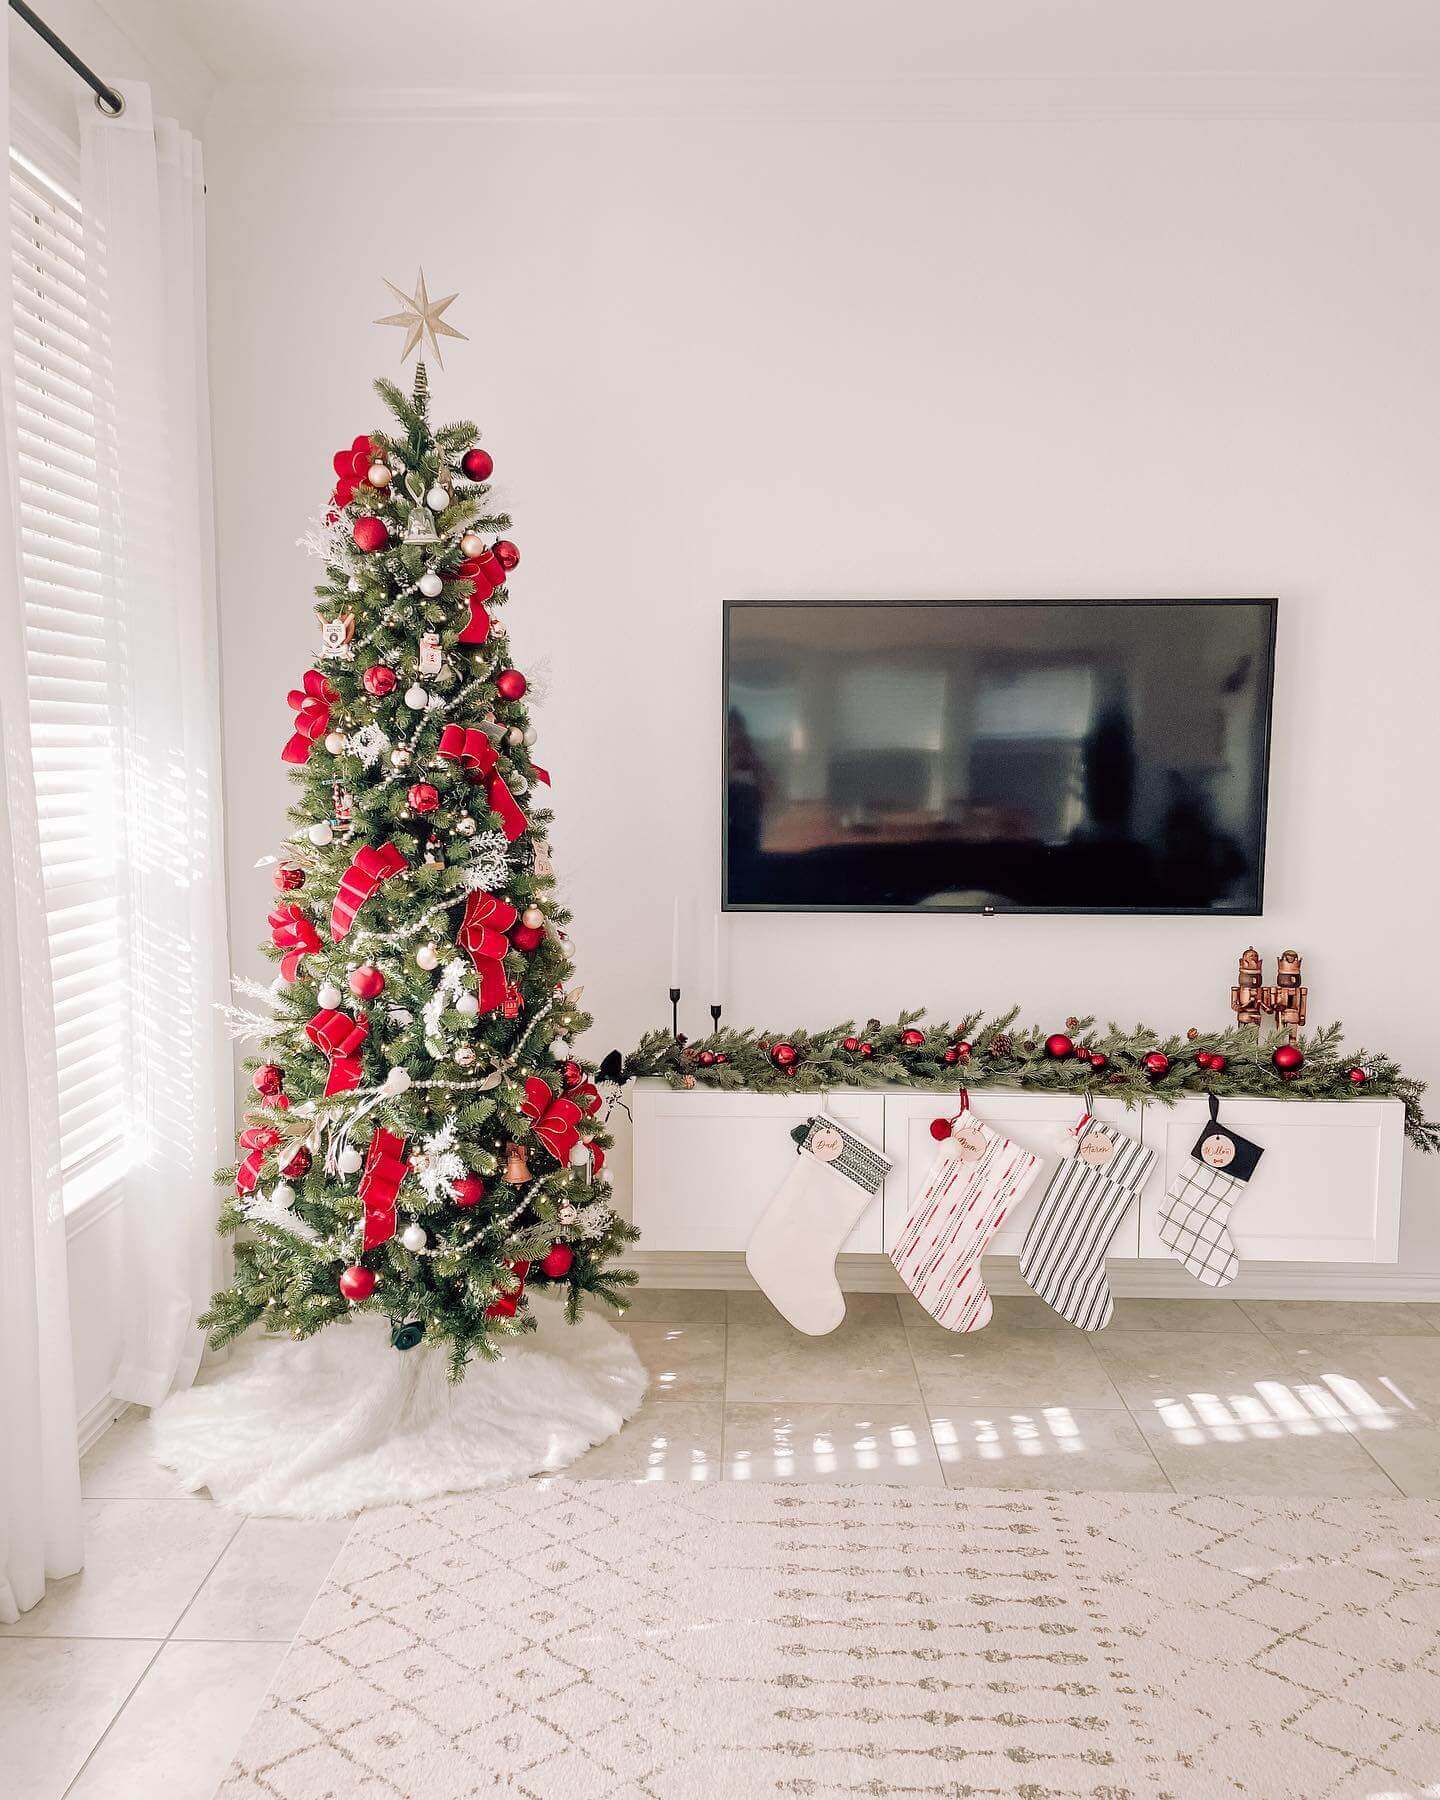 King of Christmas 10' King Douglas Fir Slim Quick-Shape Artificial Christmas Tree with 900 Warm White & Multi-Color LED Lights